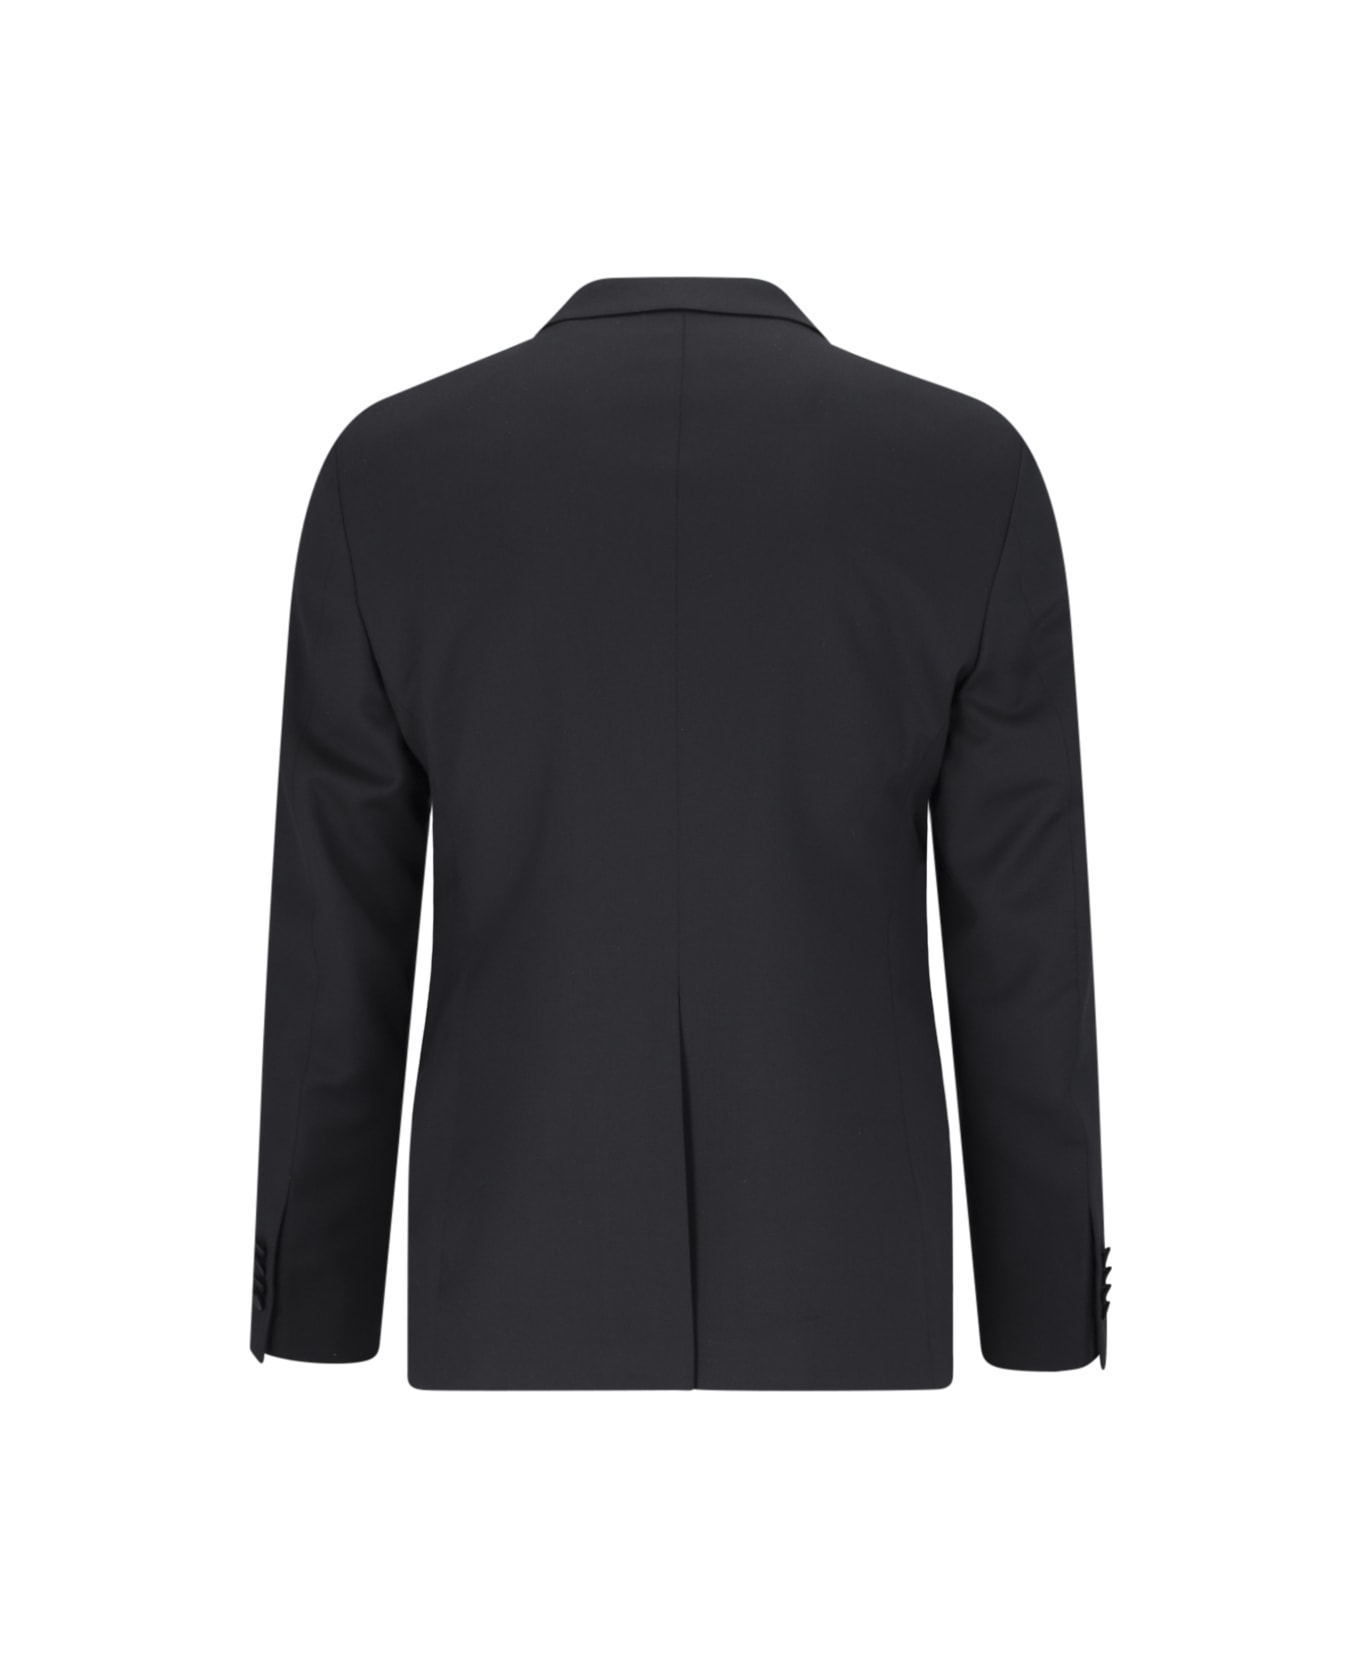 Tagliatore Single Breast Suit - Black   スーツ